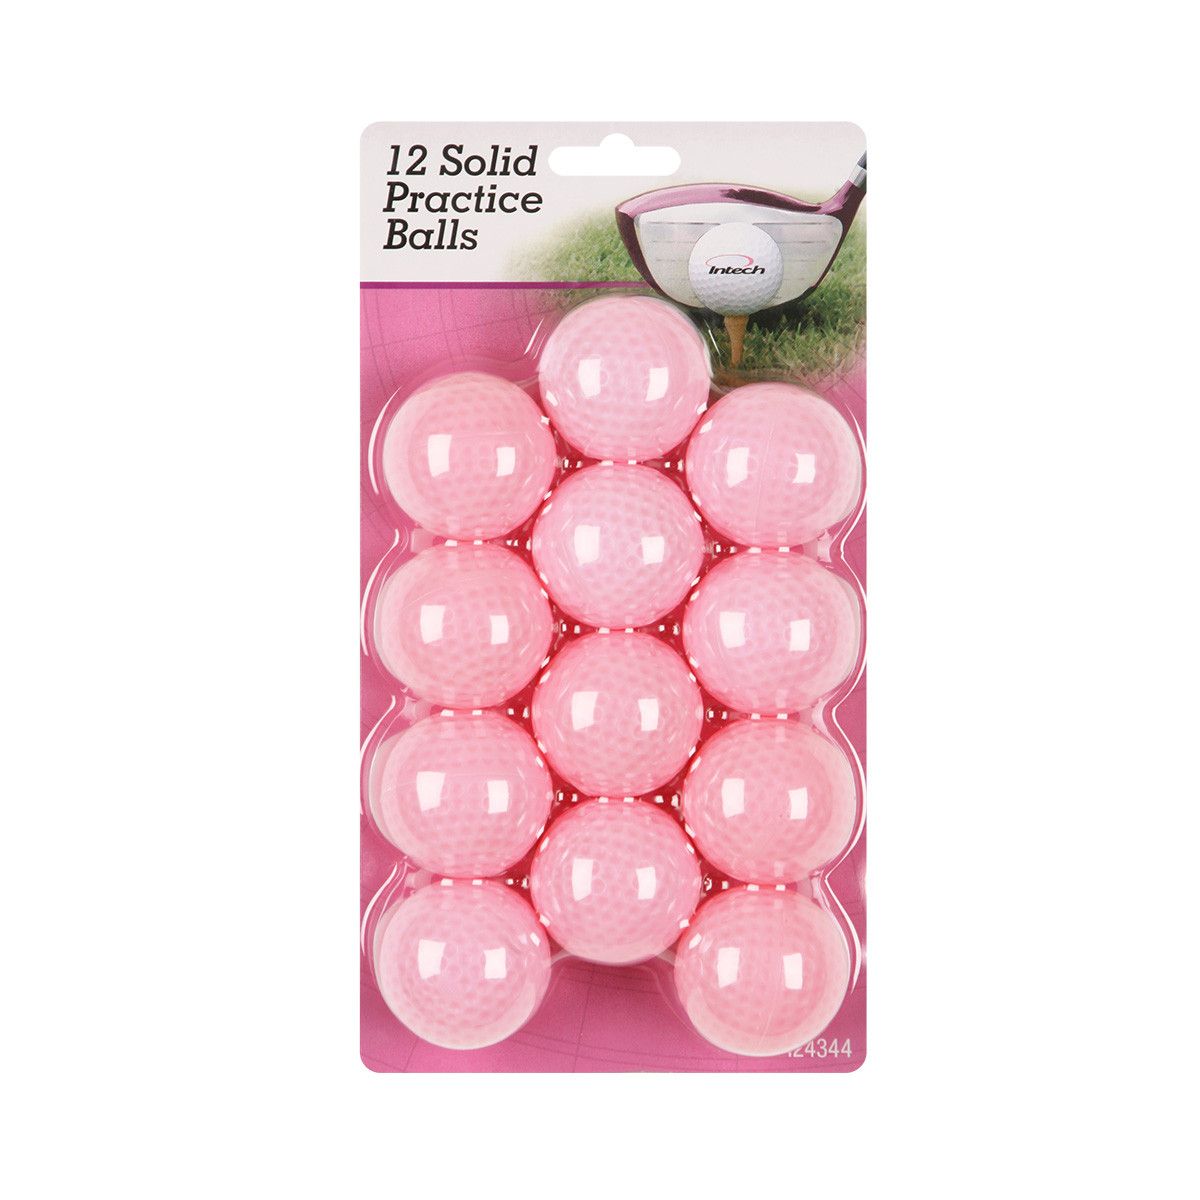 12 pink Intech Hollow, Dimpled Practice Golf Balls inside retail packaging